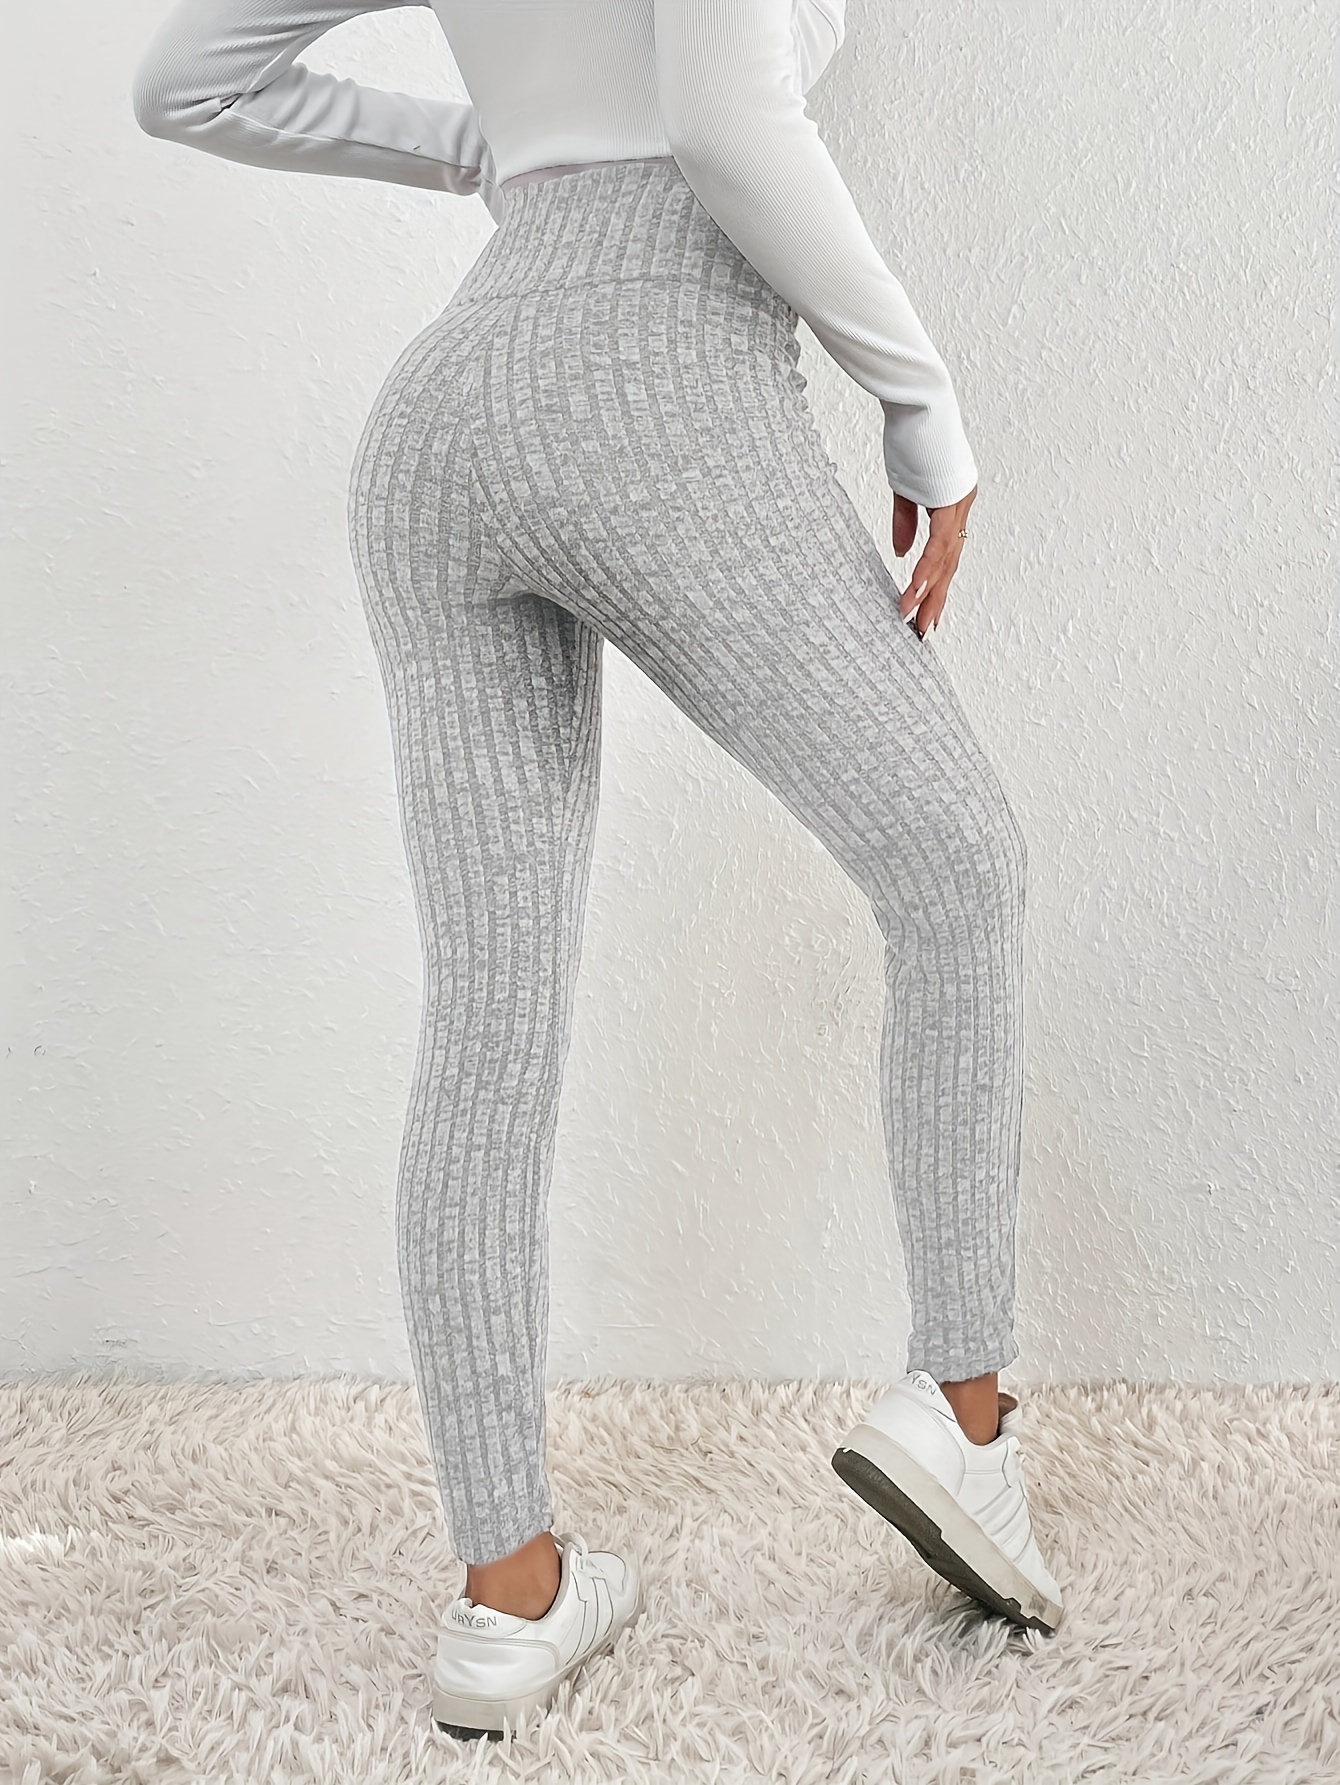  Yoga Pants - Slim Leggings, Women's Knitted Solid